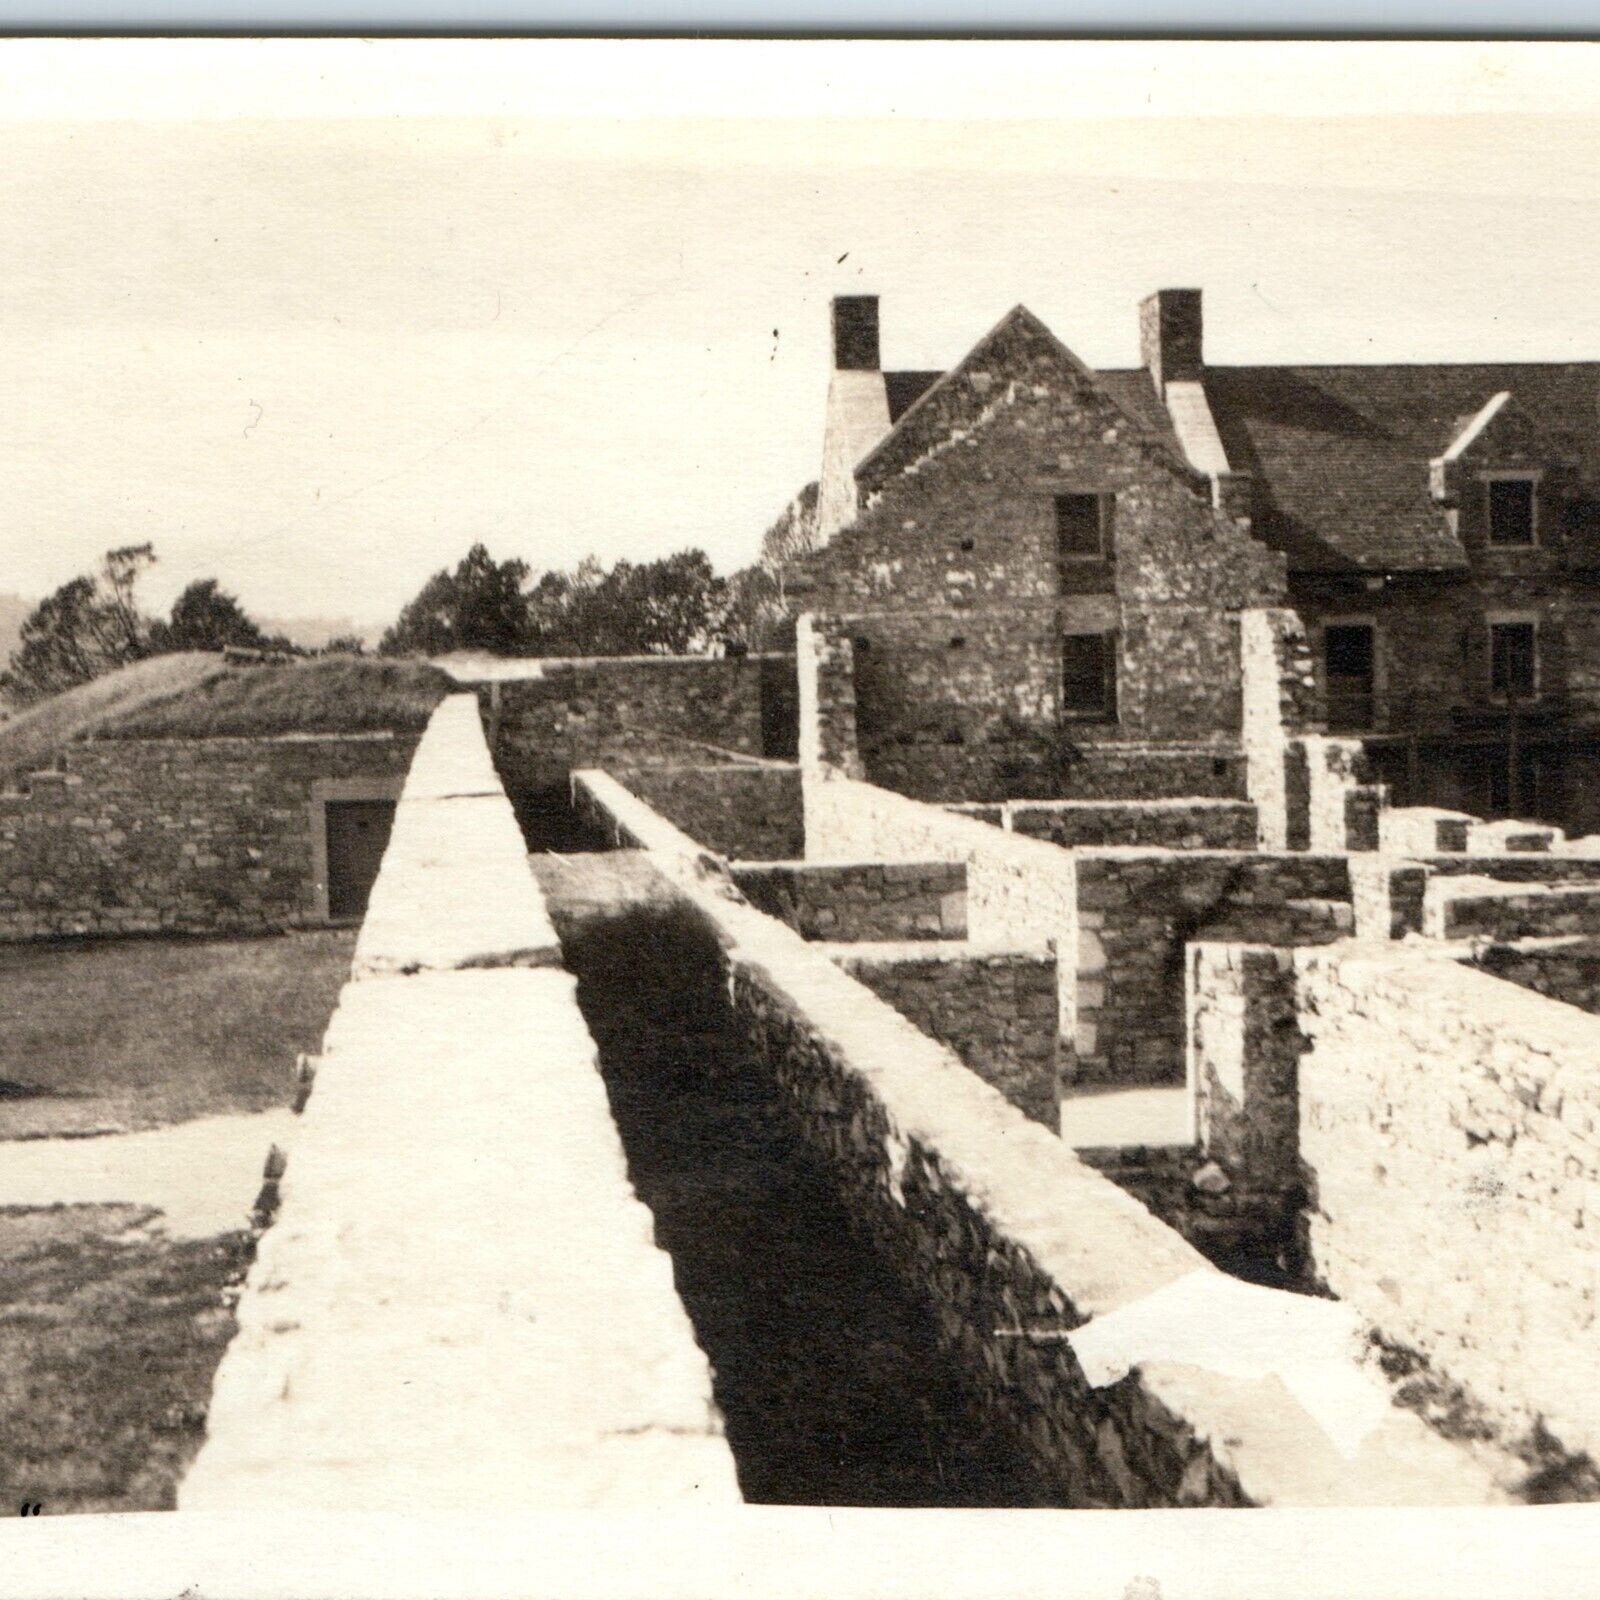 c1910s Fort Ticonderoga Star Fort Building Ruins Cannon Real Photo Carillon A154